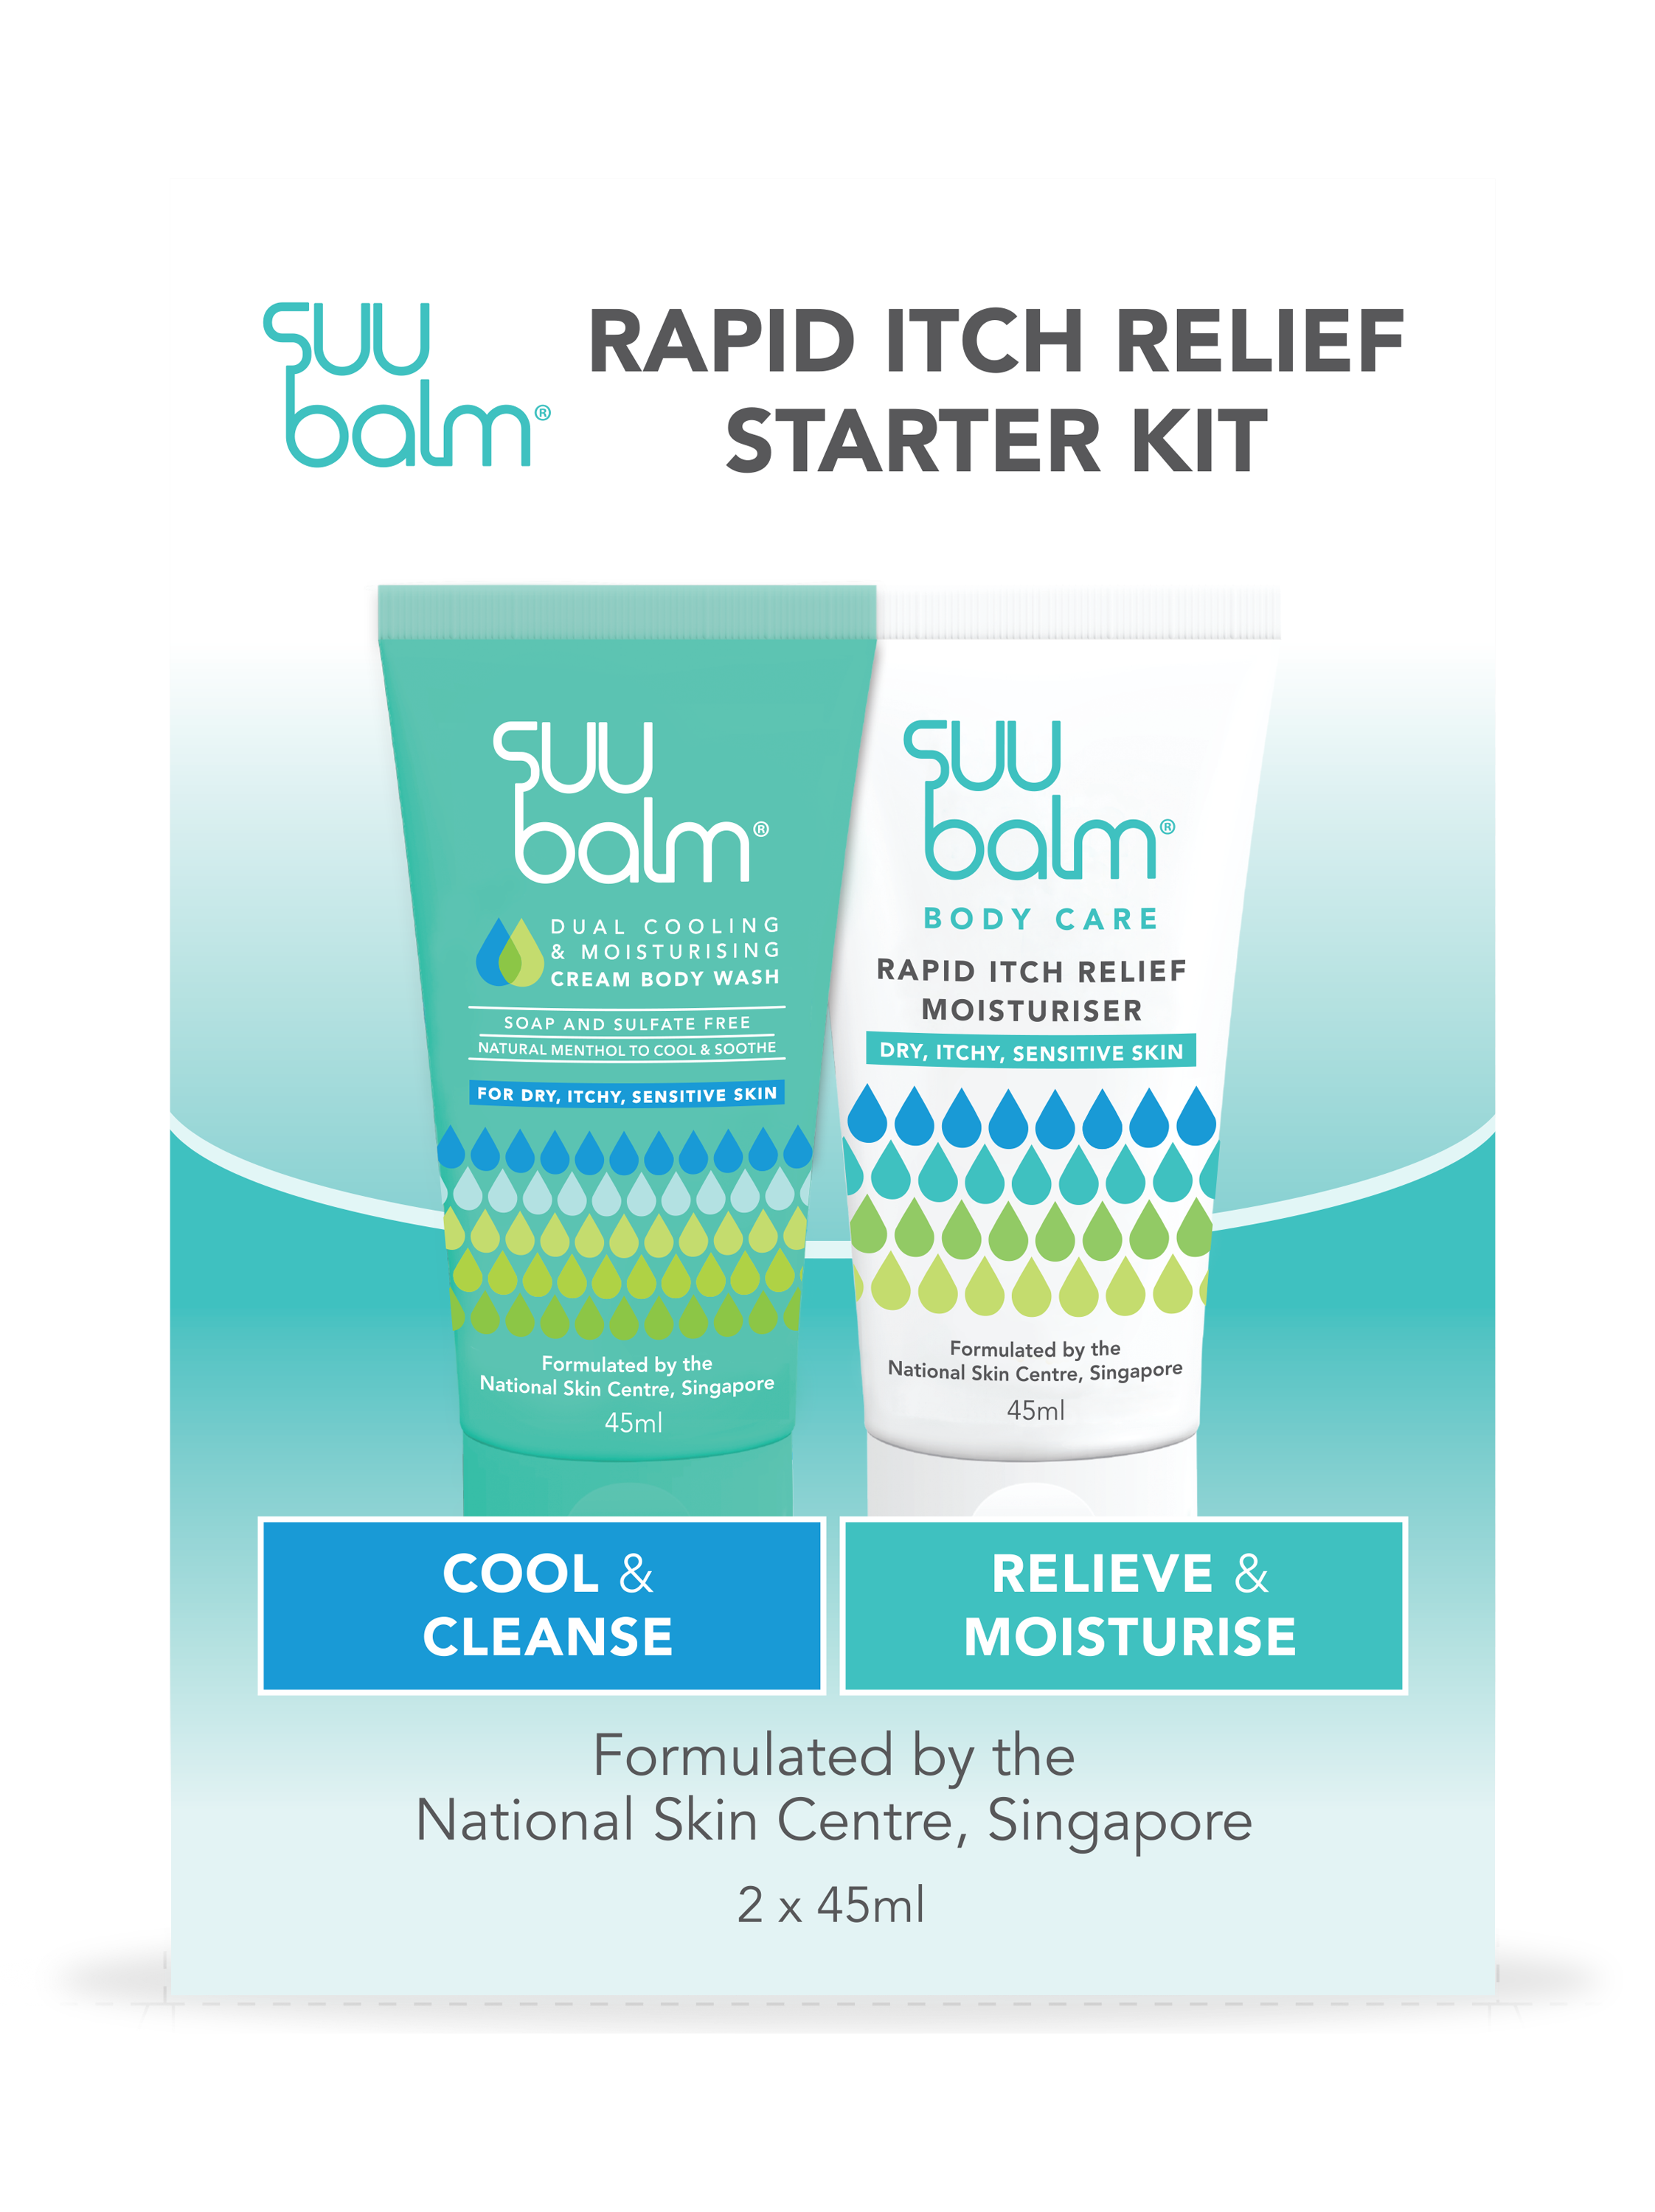 Suu Balm® Rapid Itch Relief Starter Kit